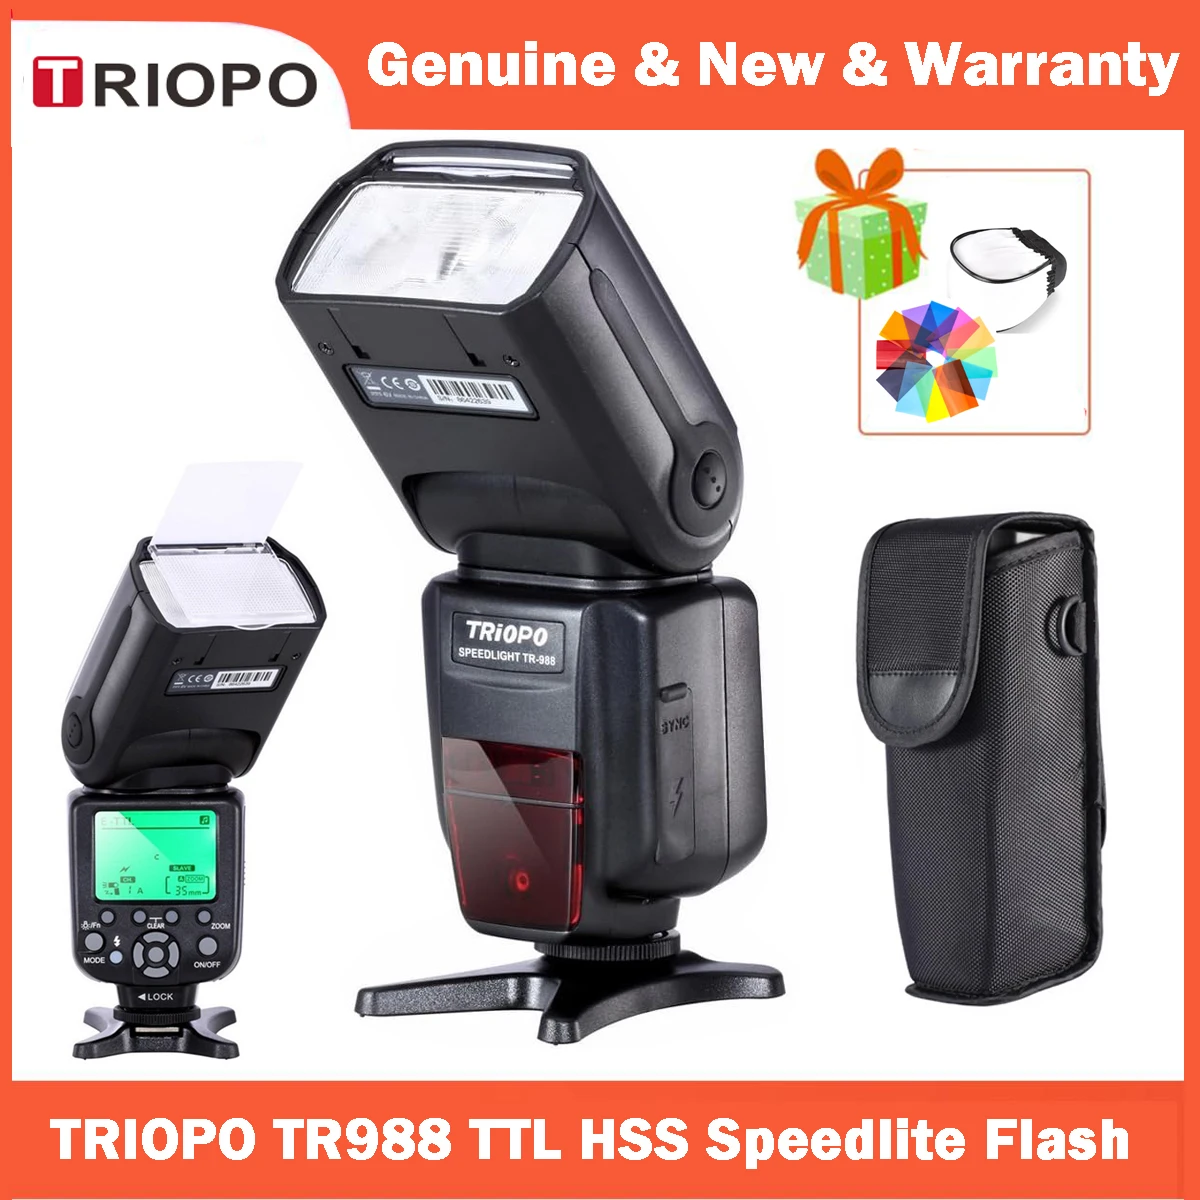 

Triopo TR-988 II TTL High Speed Sync Professional Camera Flash Speedlite for Canon Nikon 6D 60D 550D 600D Digital SLR Cameras